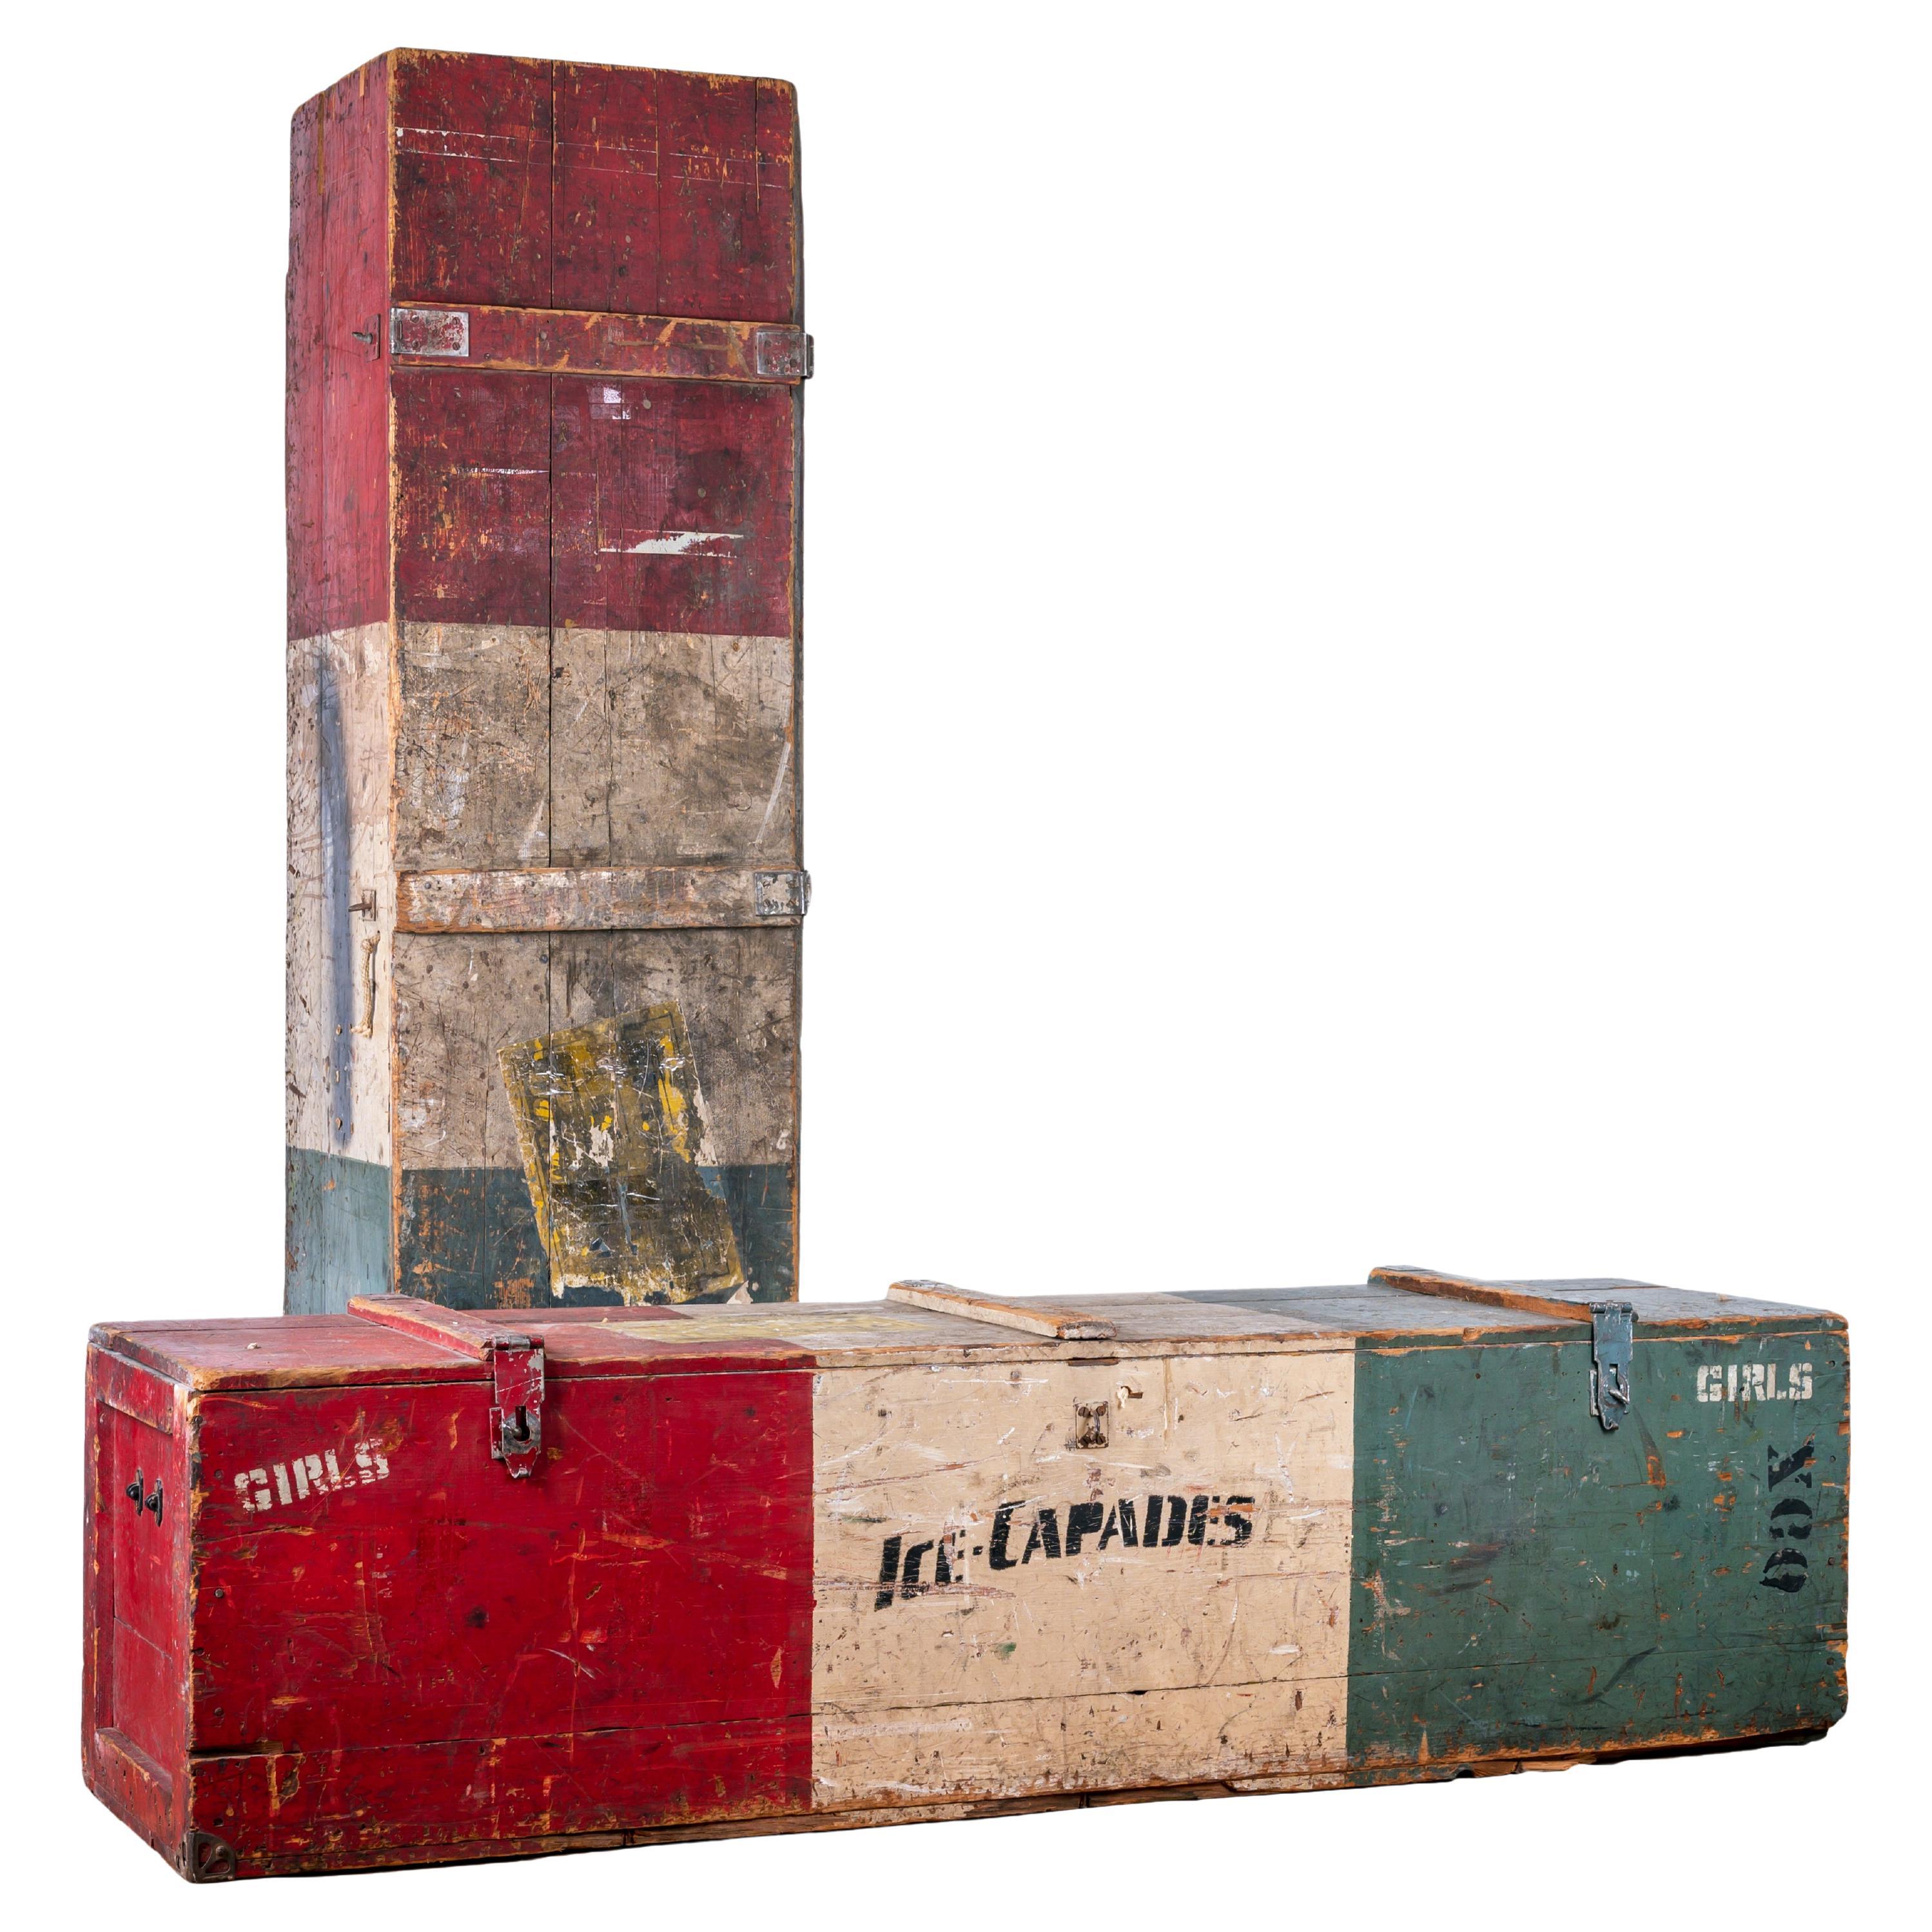 Original Ice Capades Travel Trunks, c.1940s For Sale